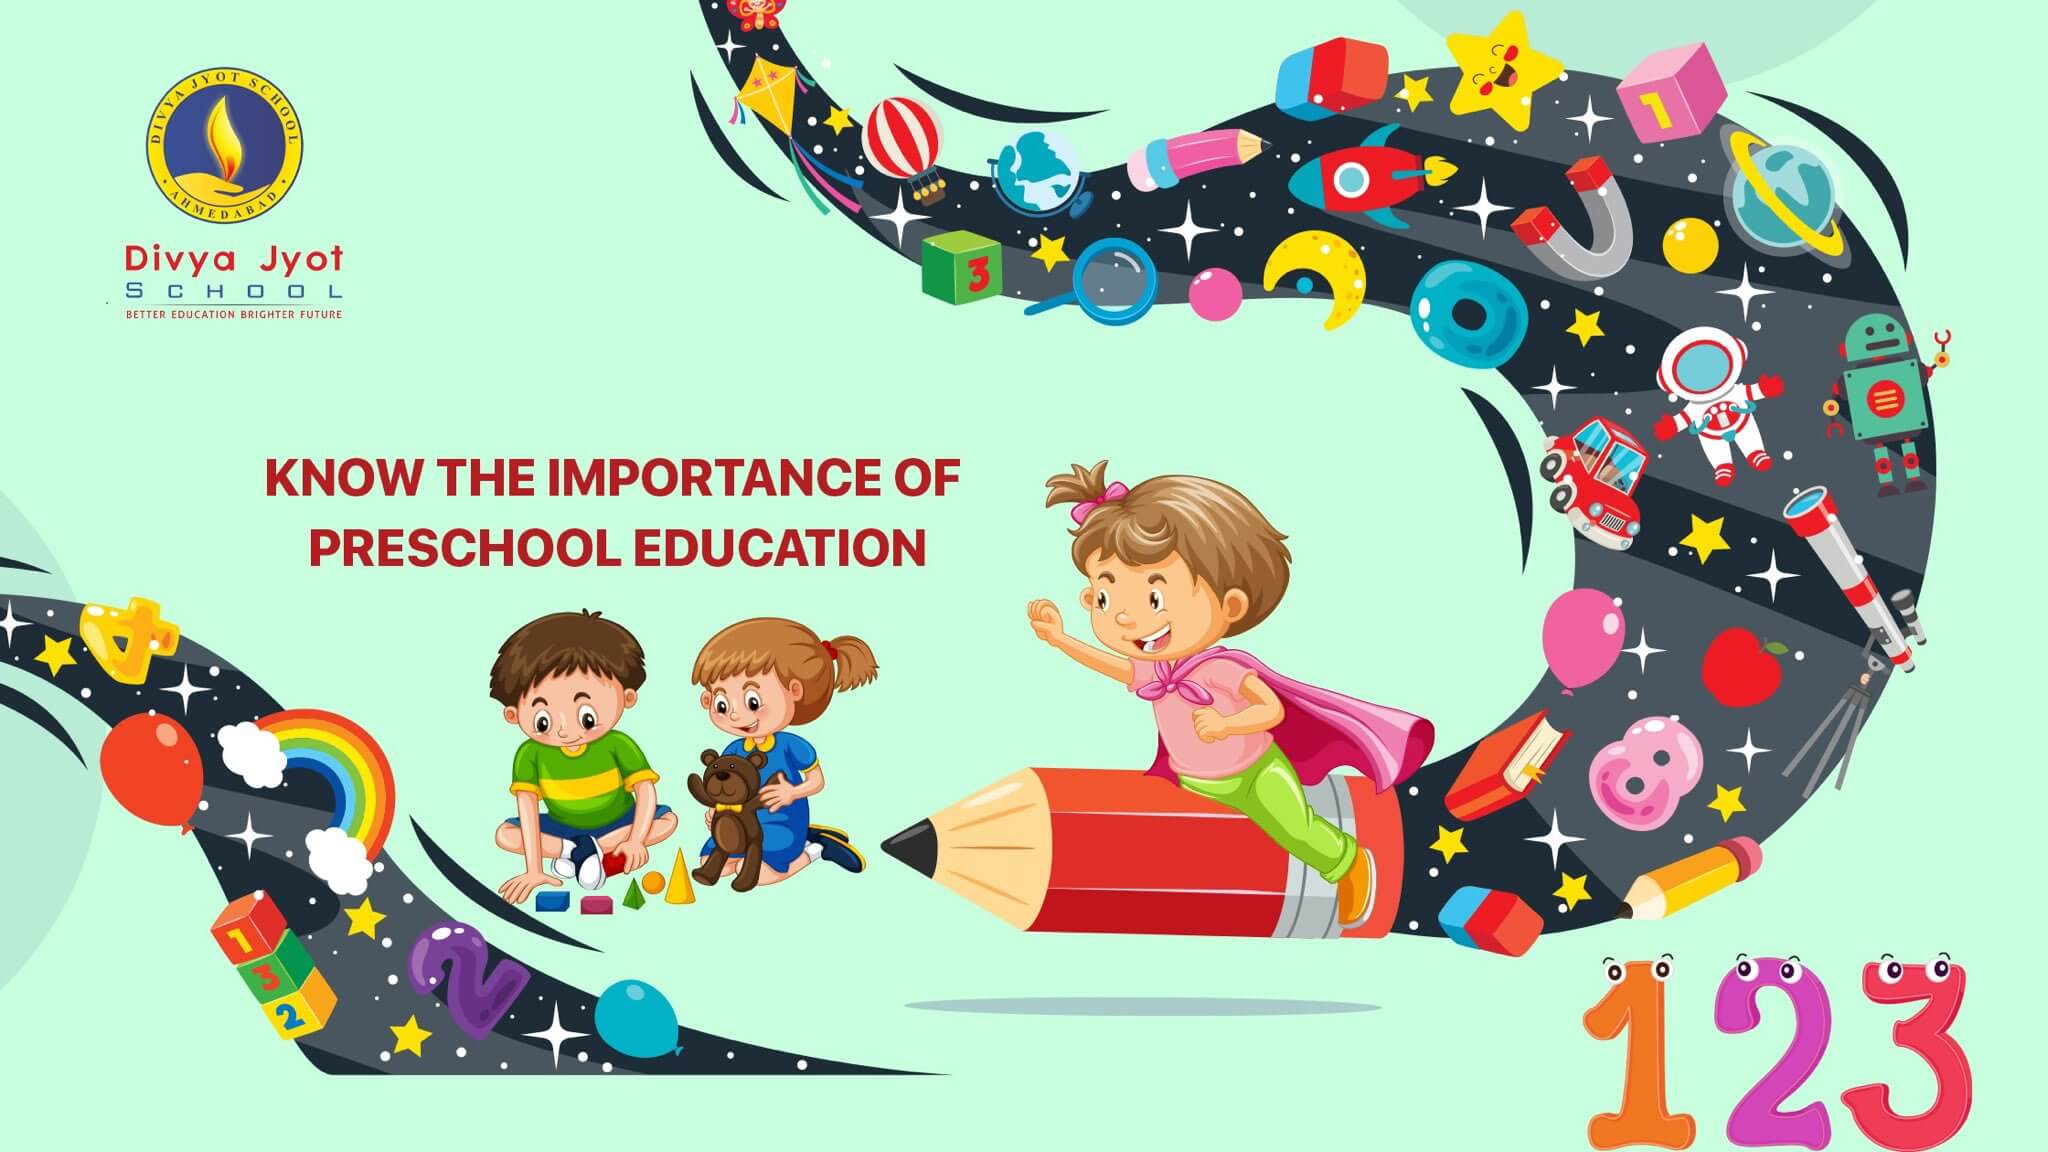 The Importance of Preschool Education at Divya Jyot School